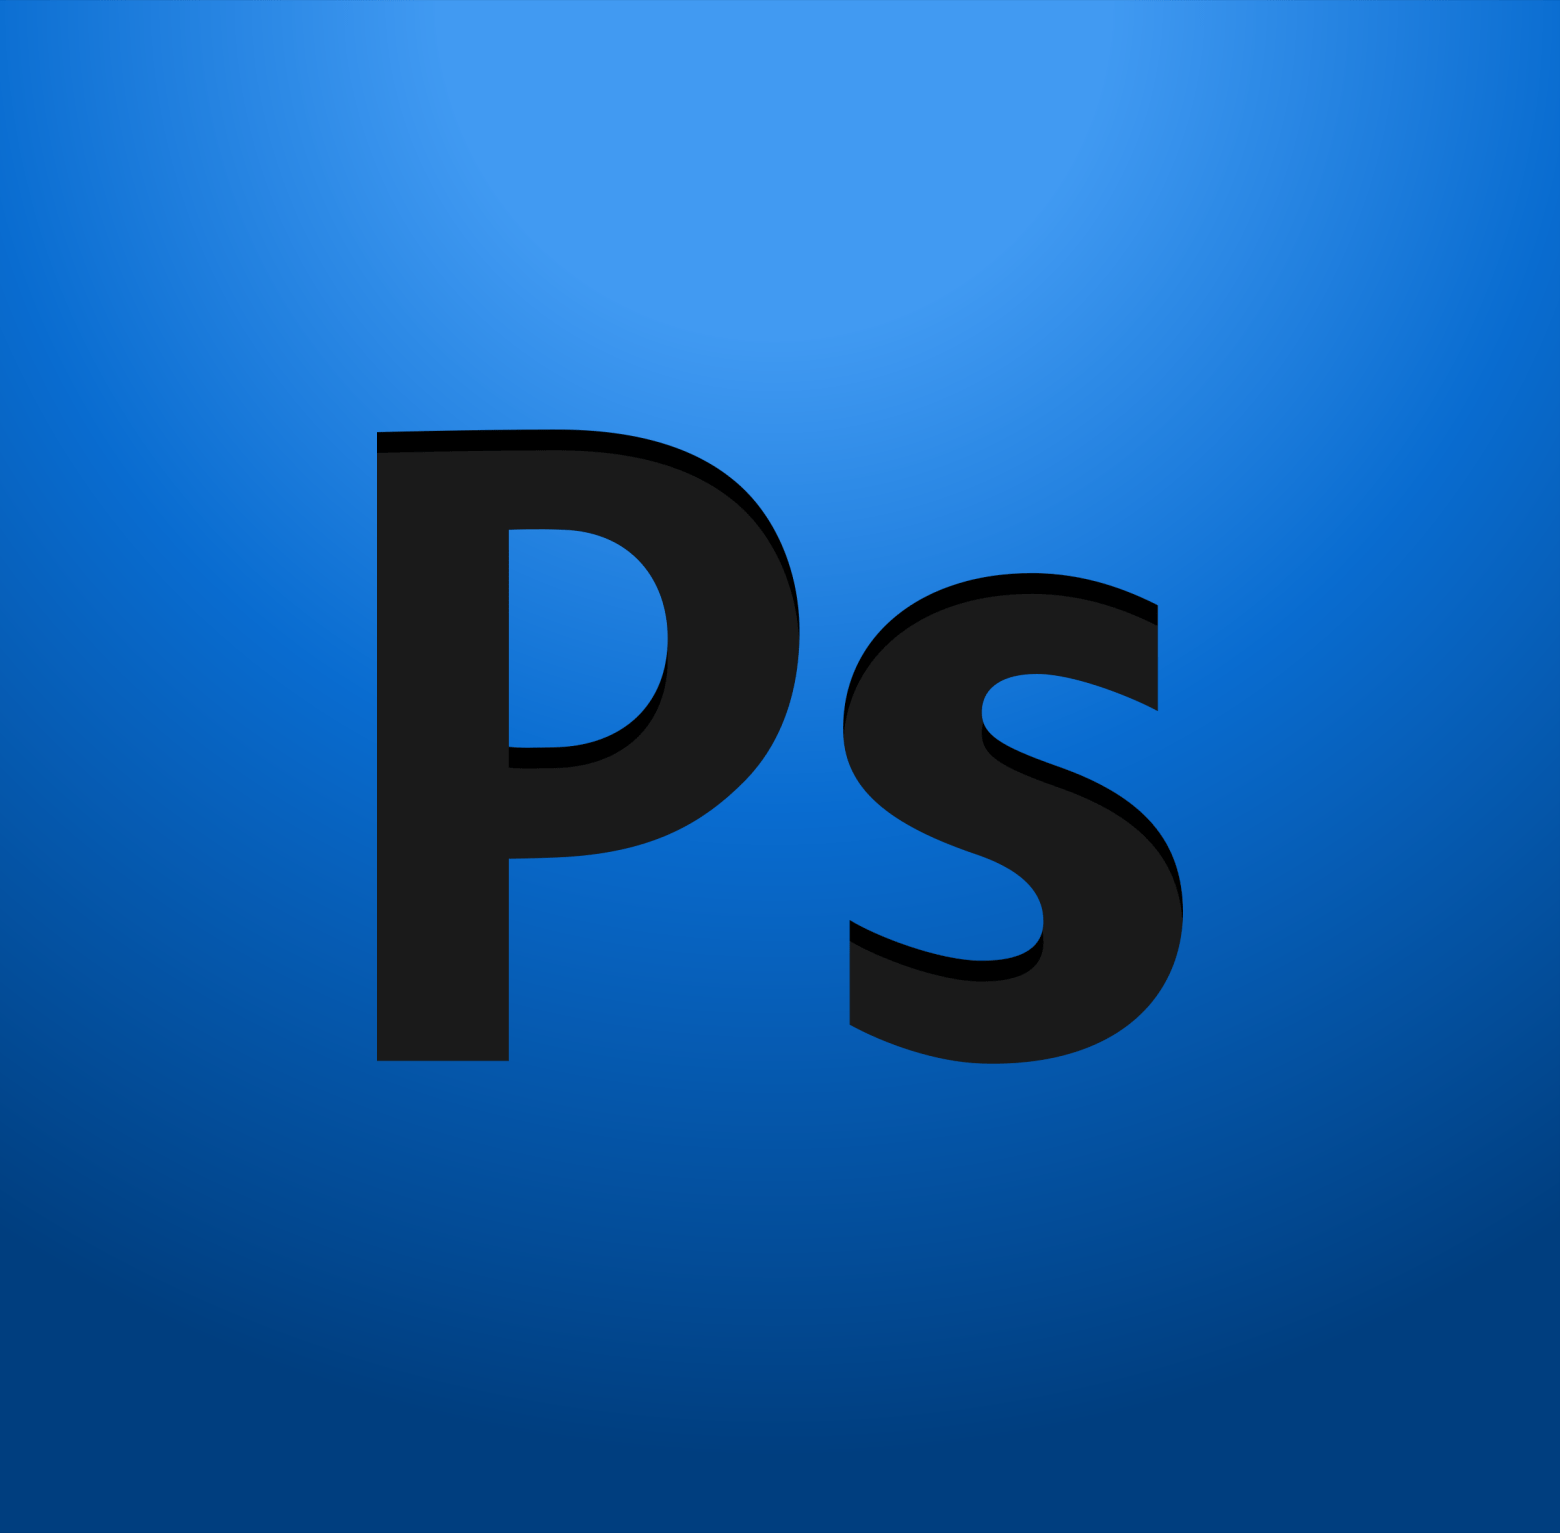 Adobe photoshop torrent for mac kickasstorrents